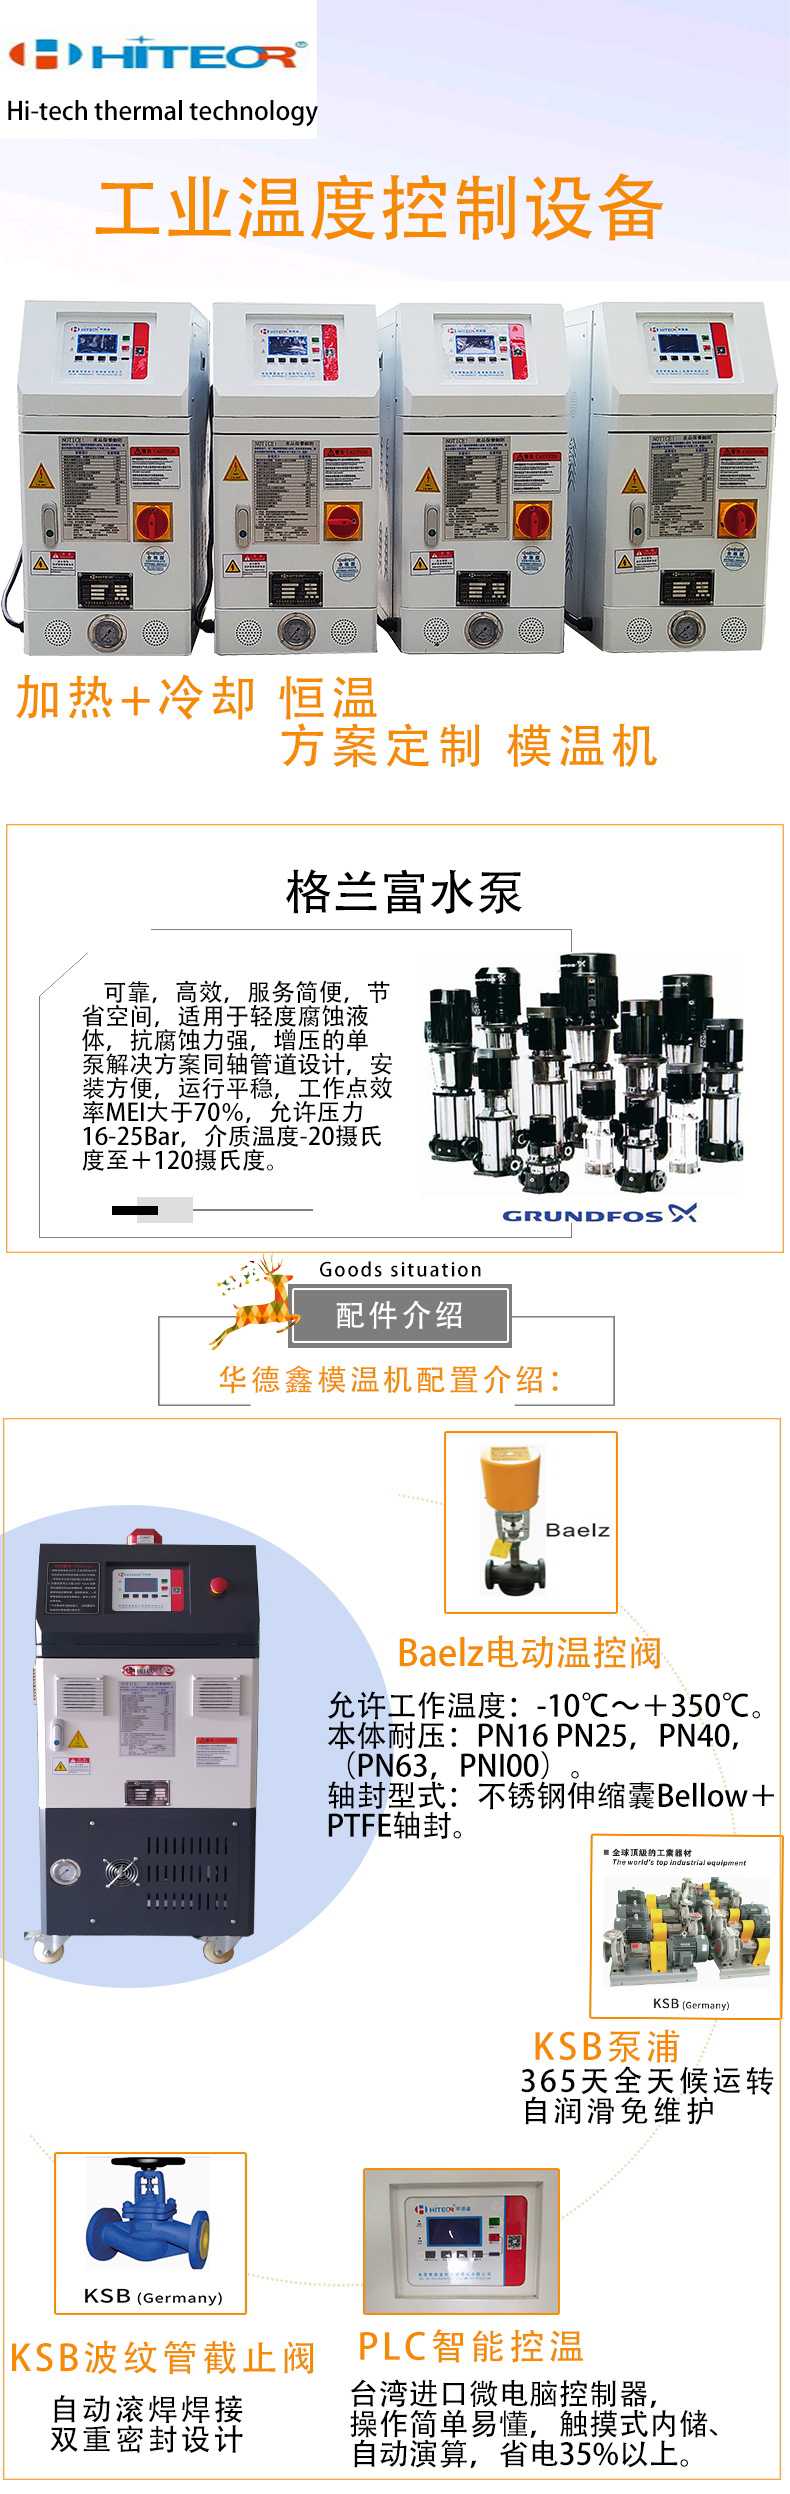 Mold temperature machine, mold oil heater, mold temperature water heater, plastic molding 130 degree dual temperature water temperature machine, Huadexin